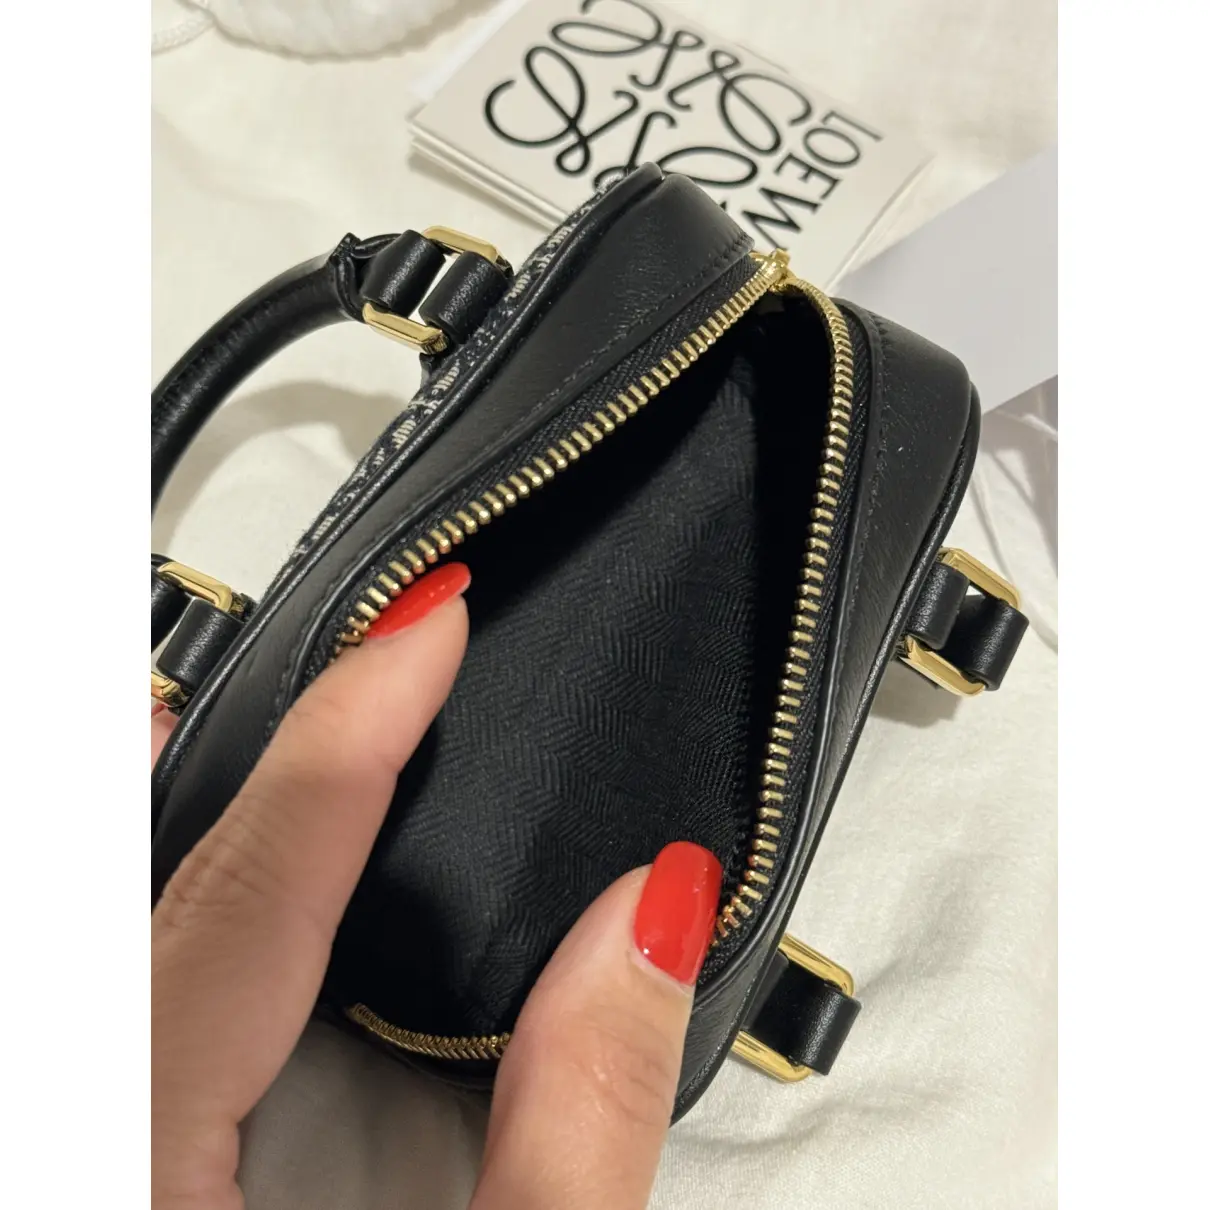 Luxury Loewe Handbags Women